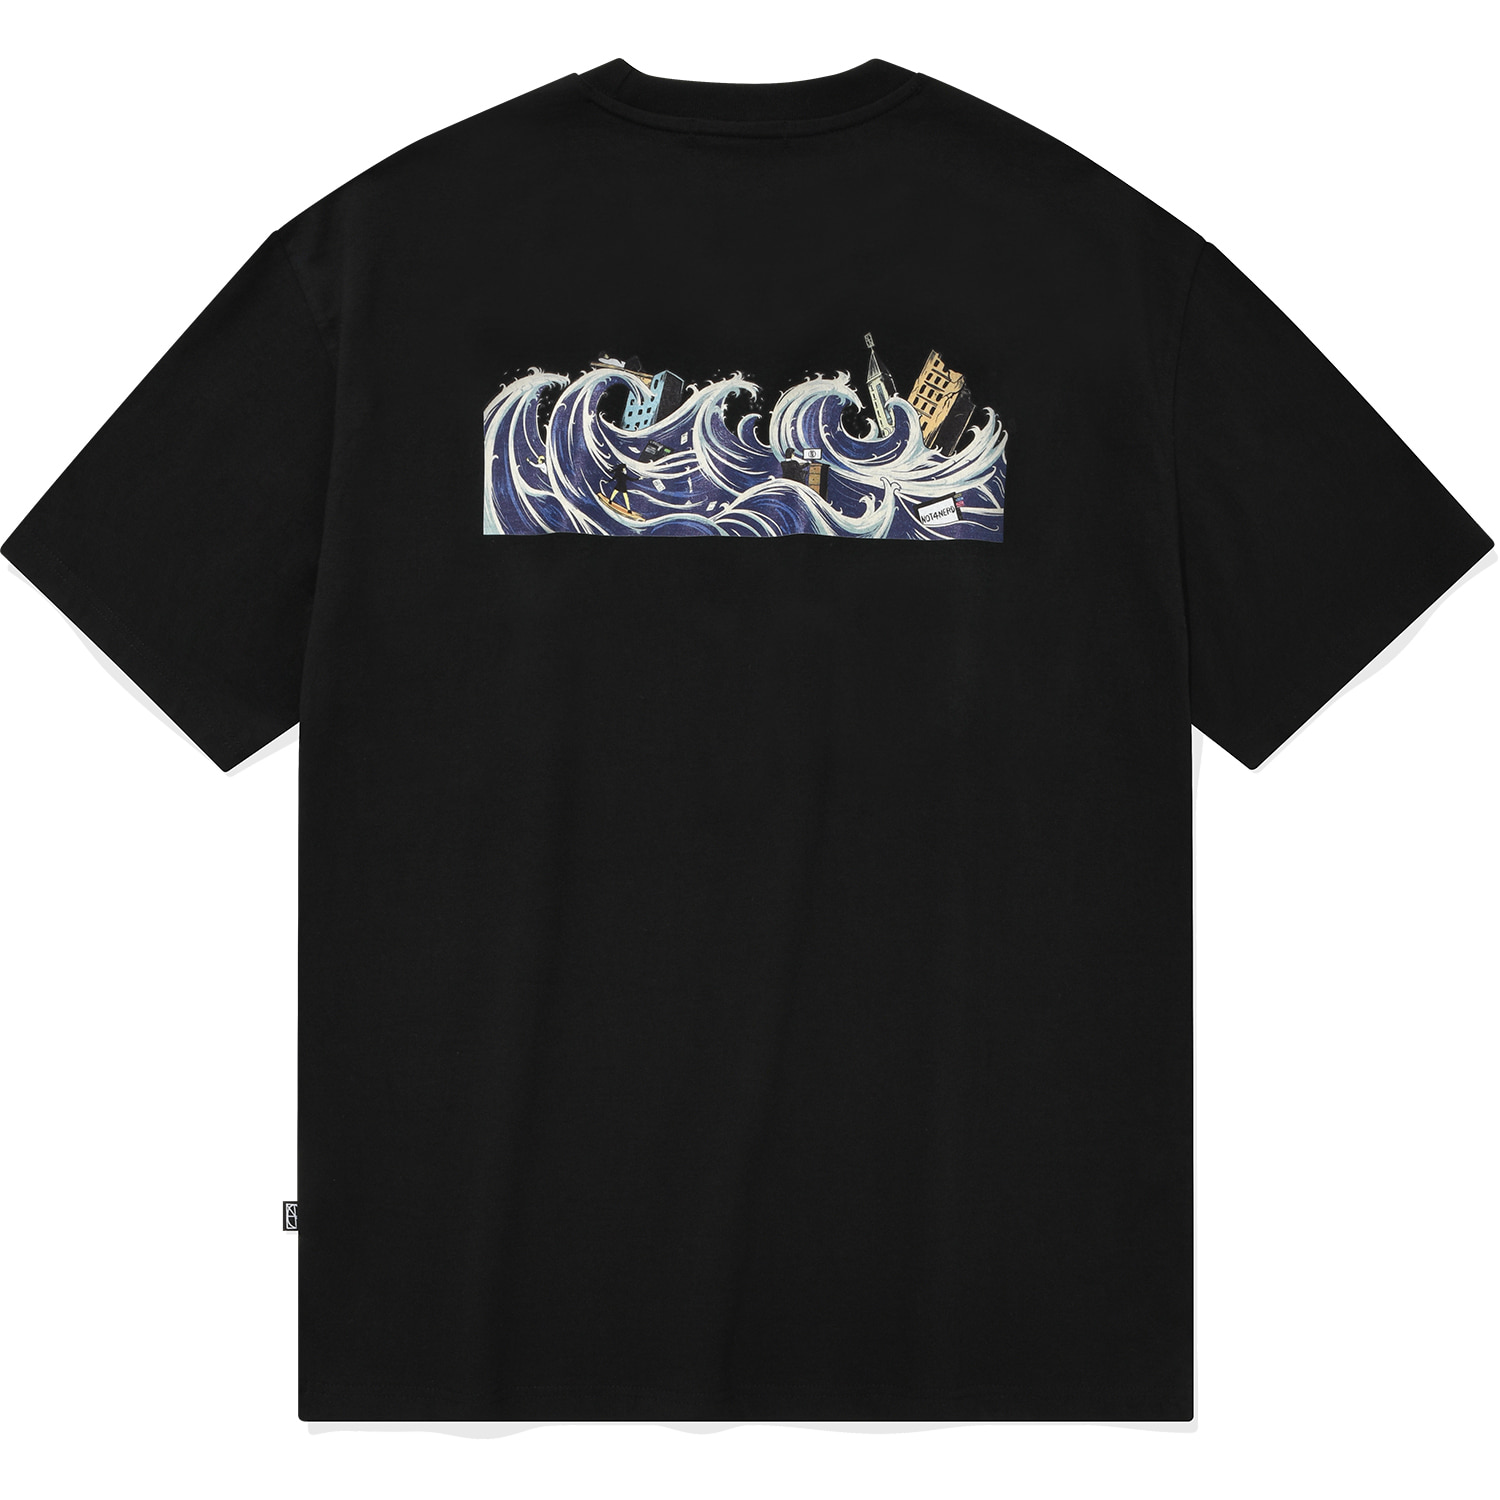 Tidal Wave T-Shirts Black,NOT4NERD